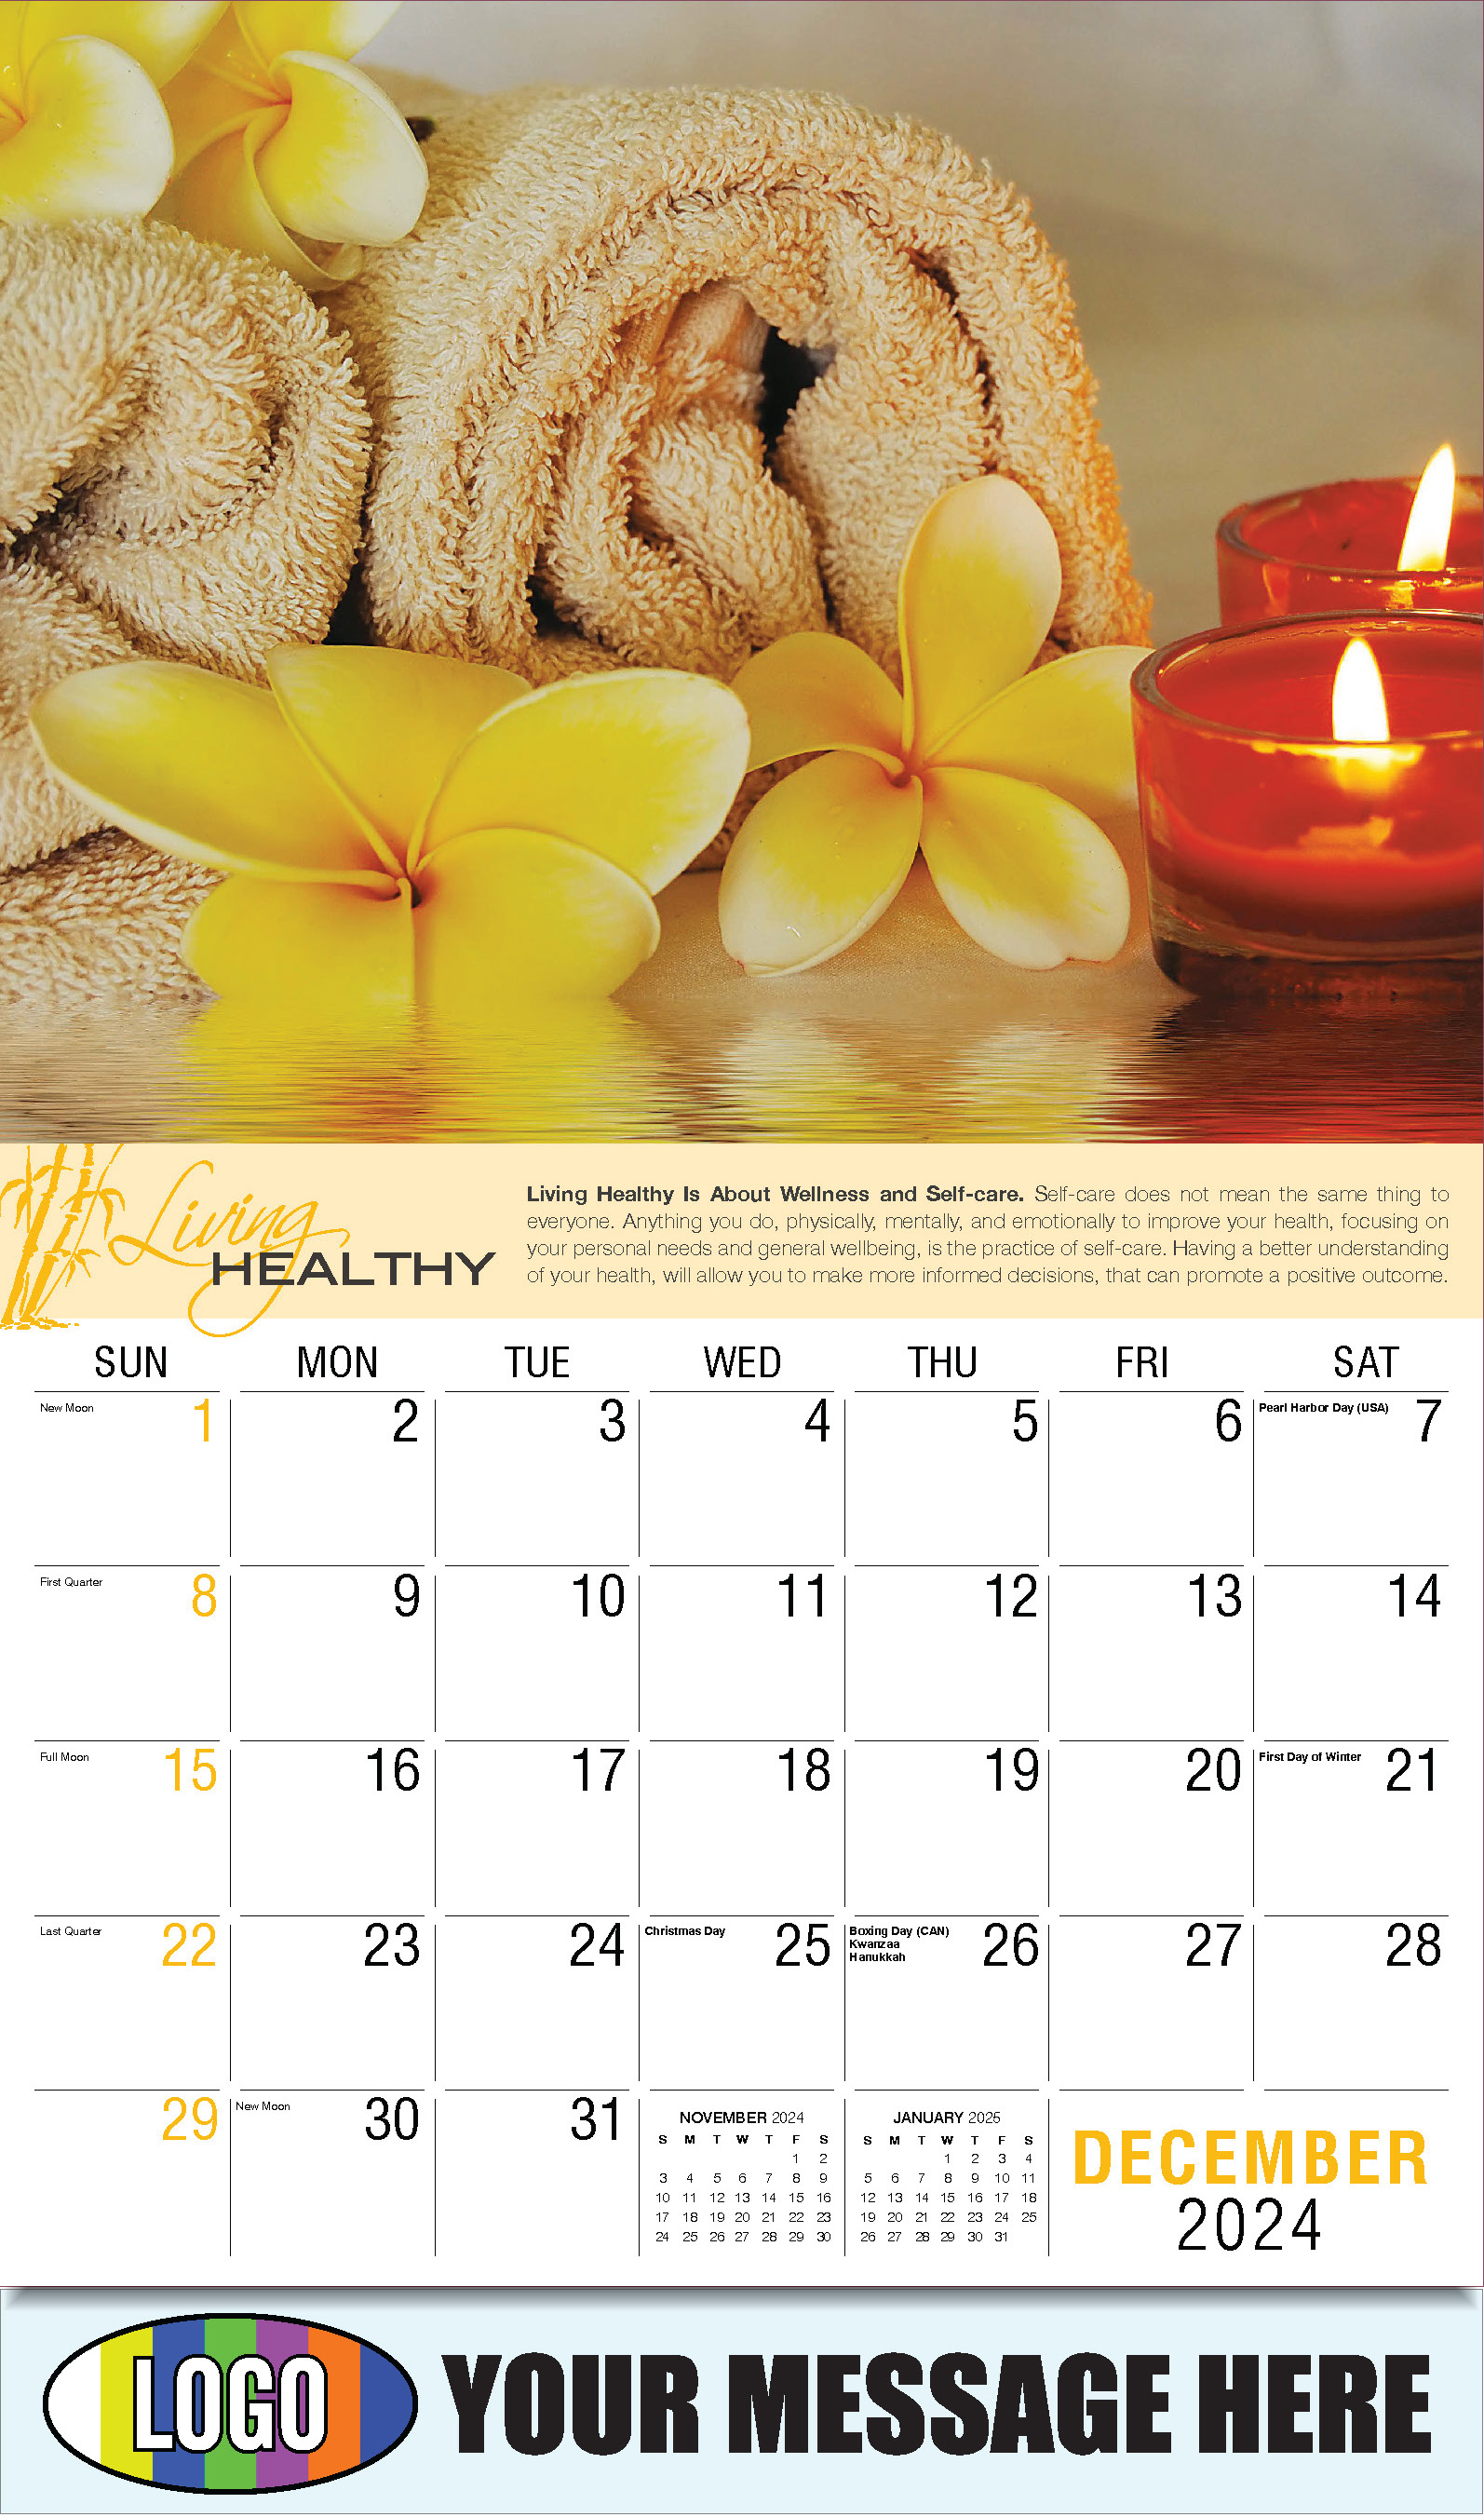 Living Healthy 2025 Business Promotional Calendar - December_a